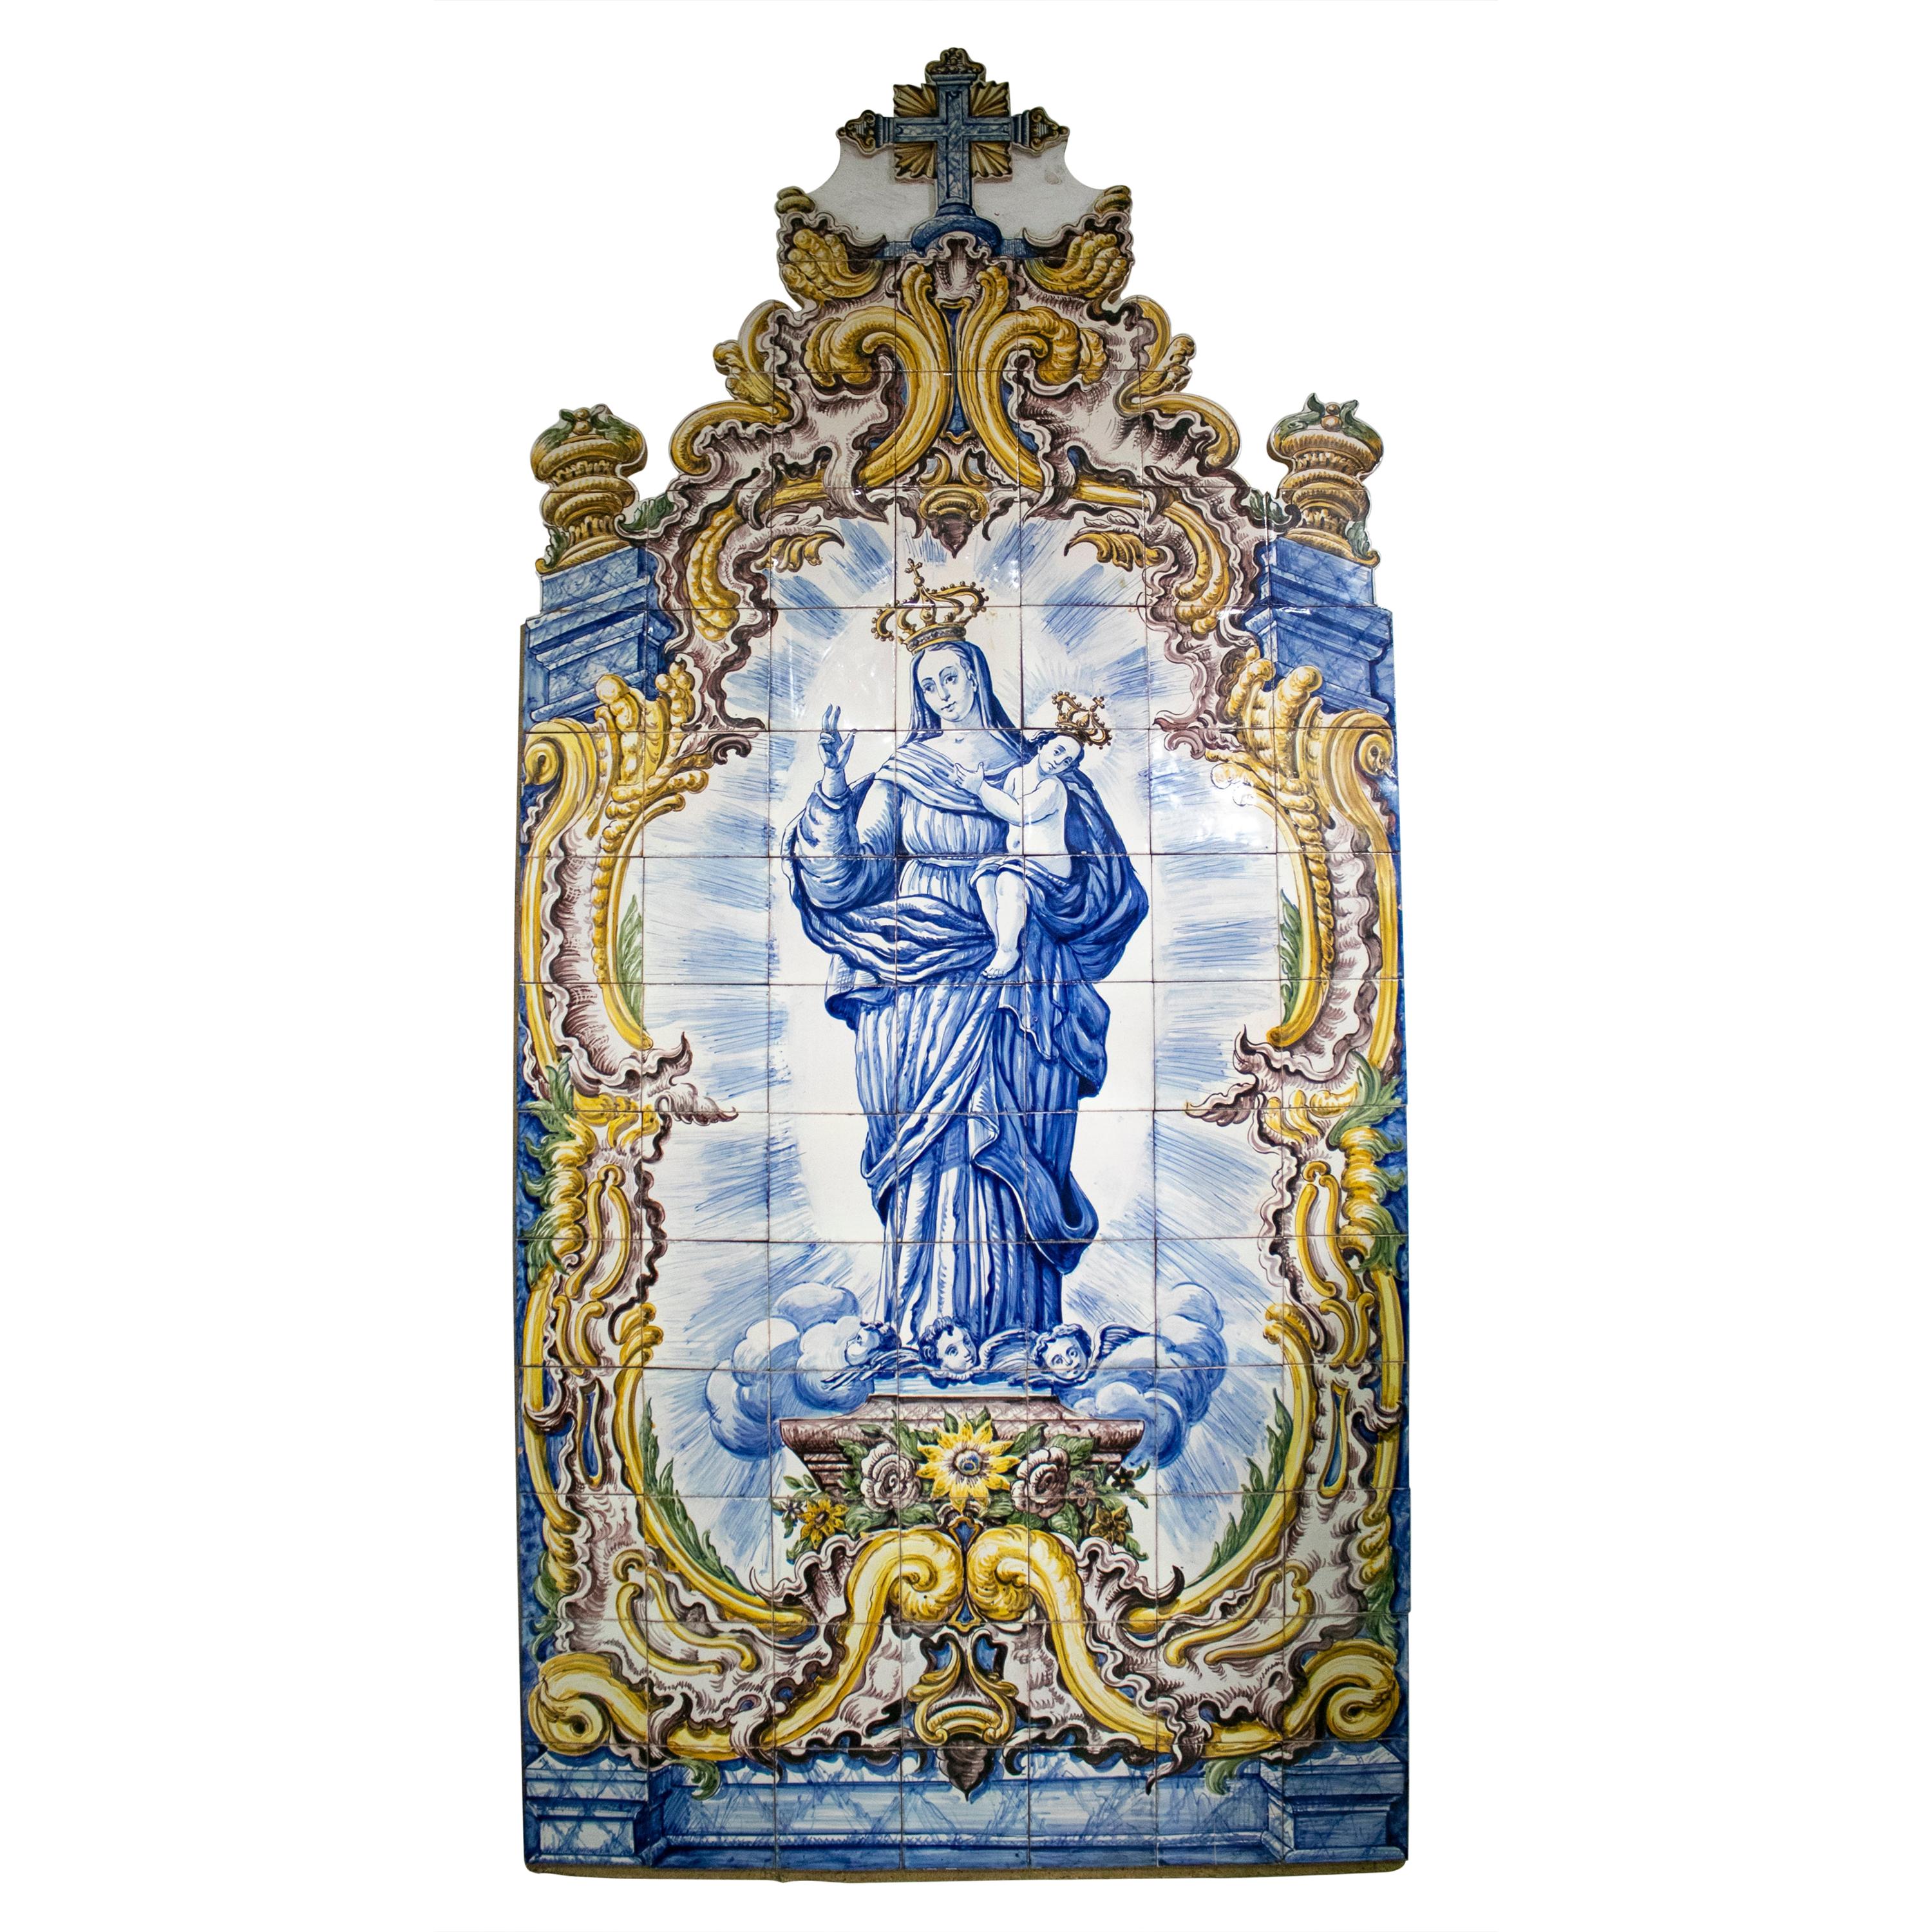 Mary with Child Portuguese Glazed Ceramic Tile Panel Signed M. M. Antunes